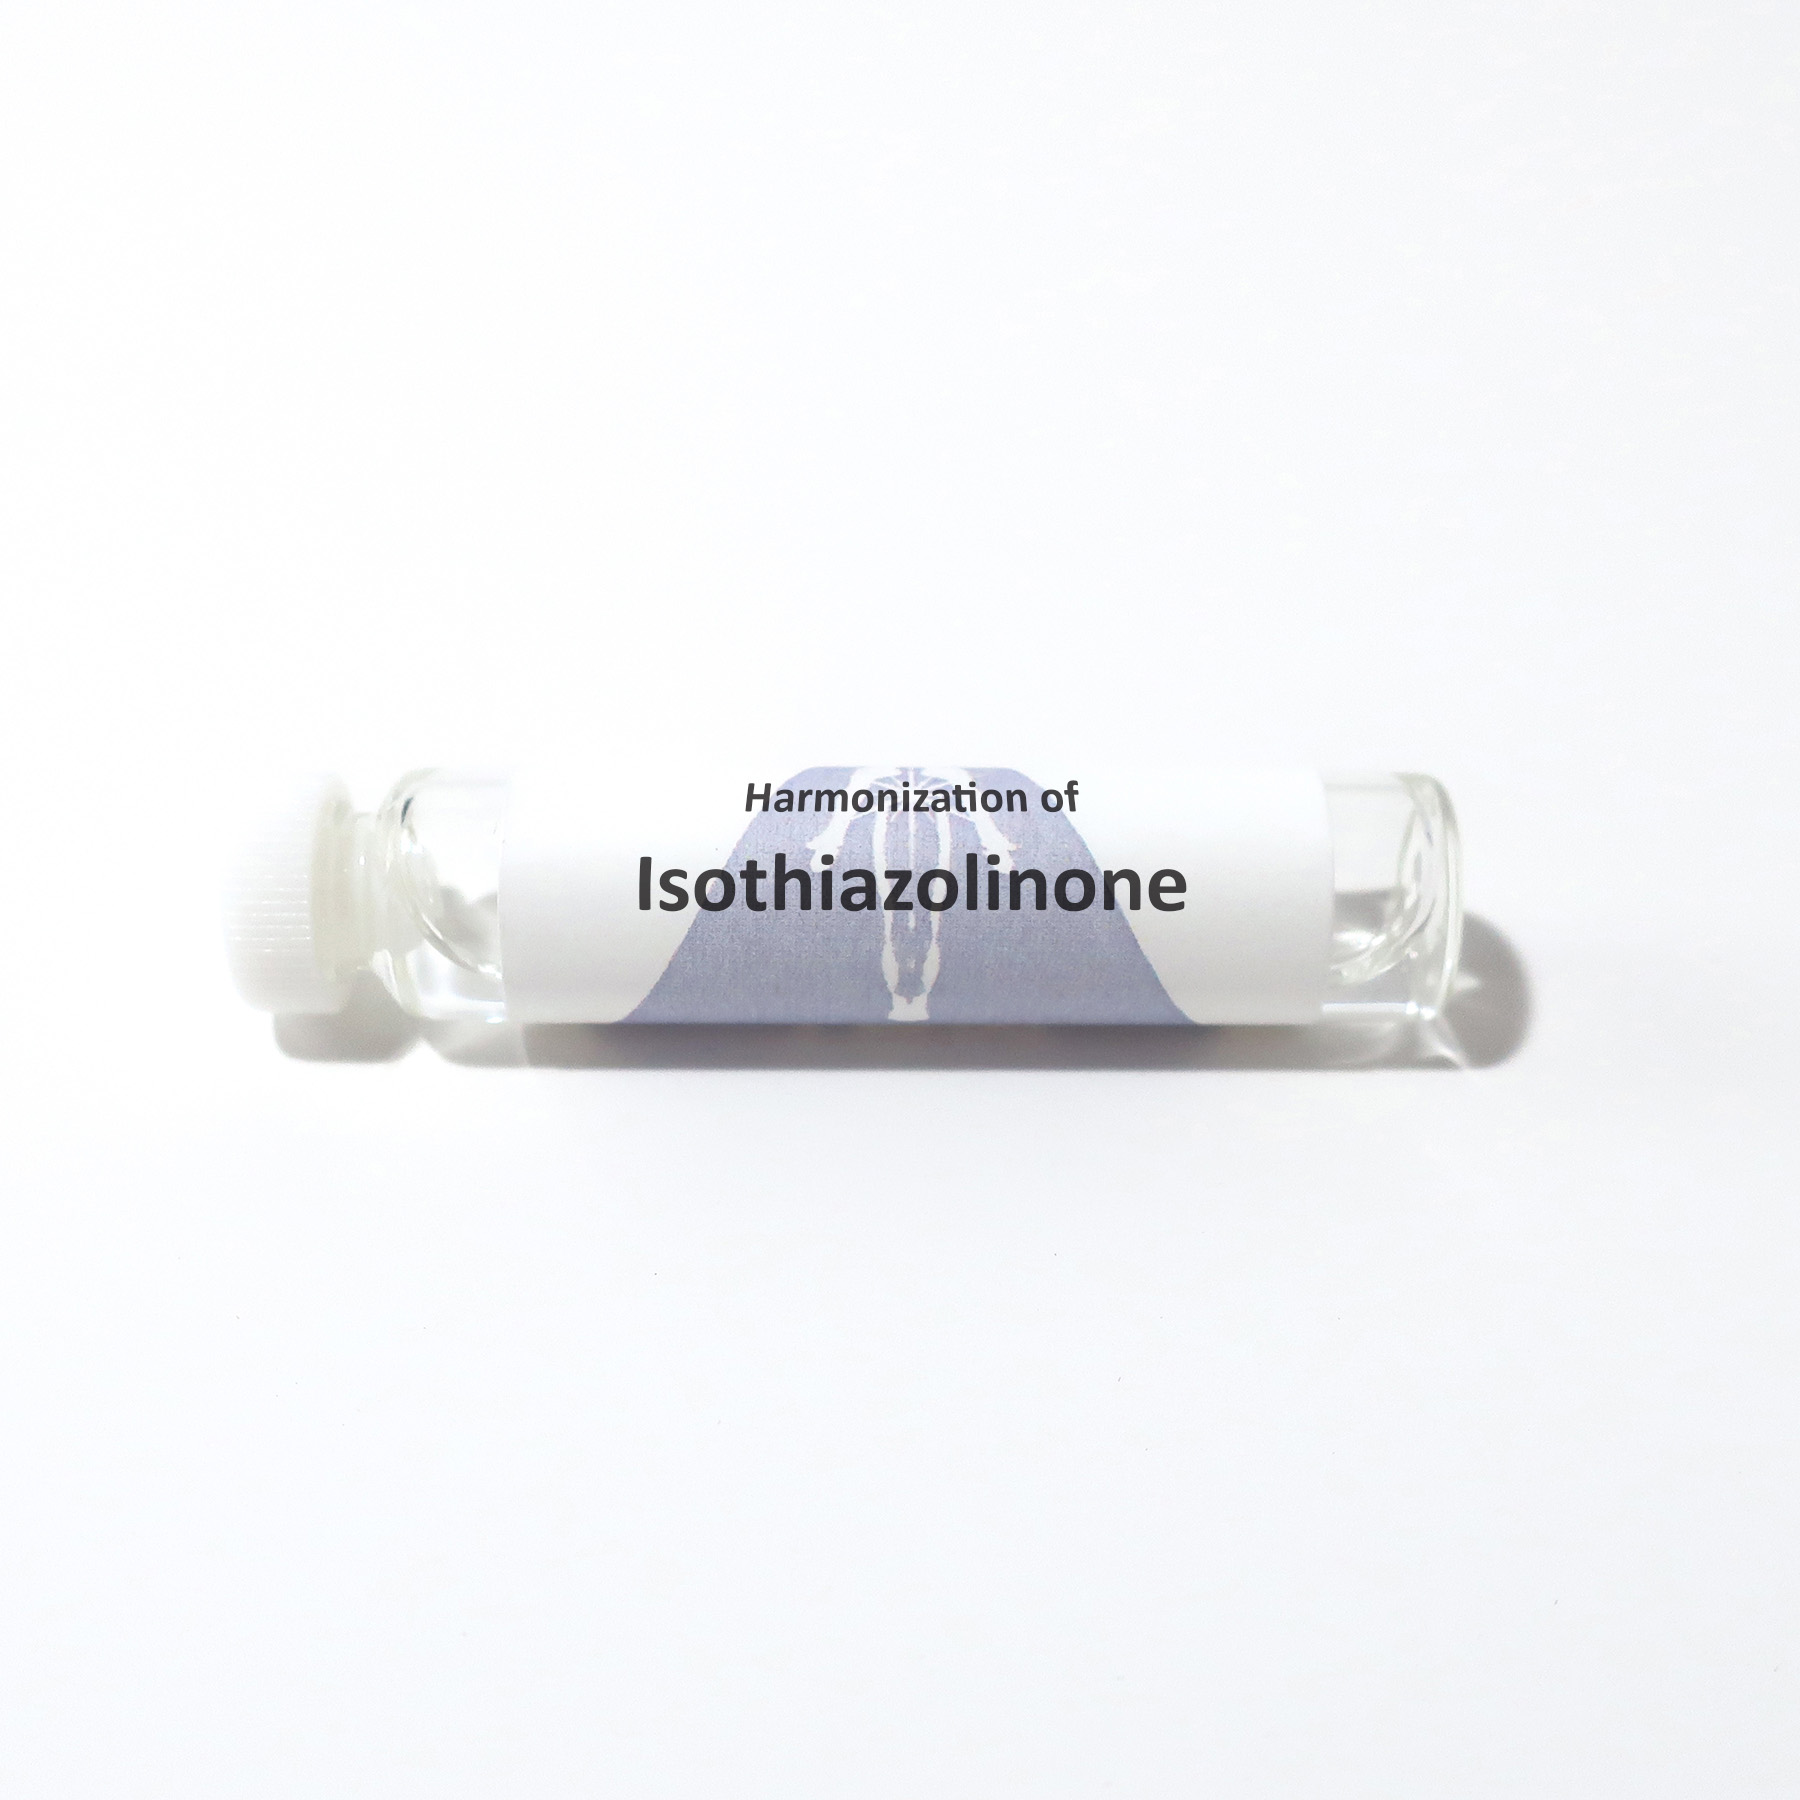 Isothiazolinone